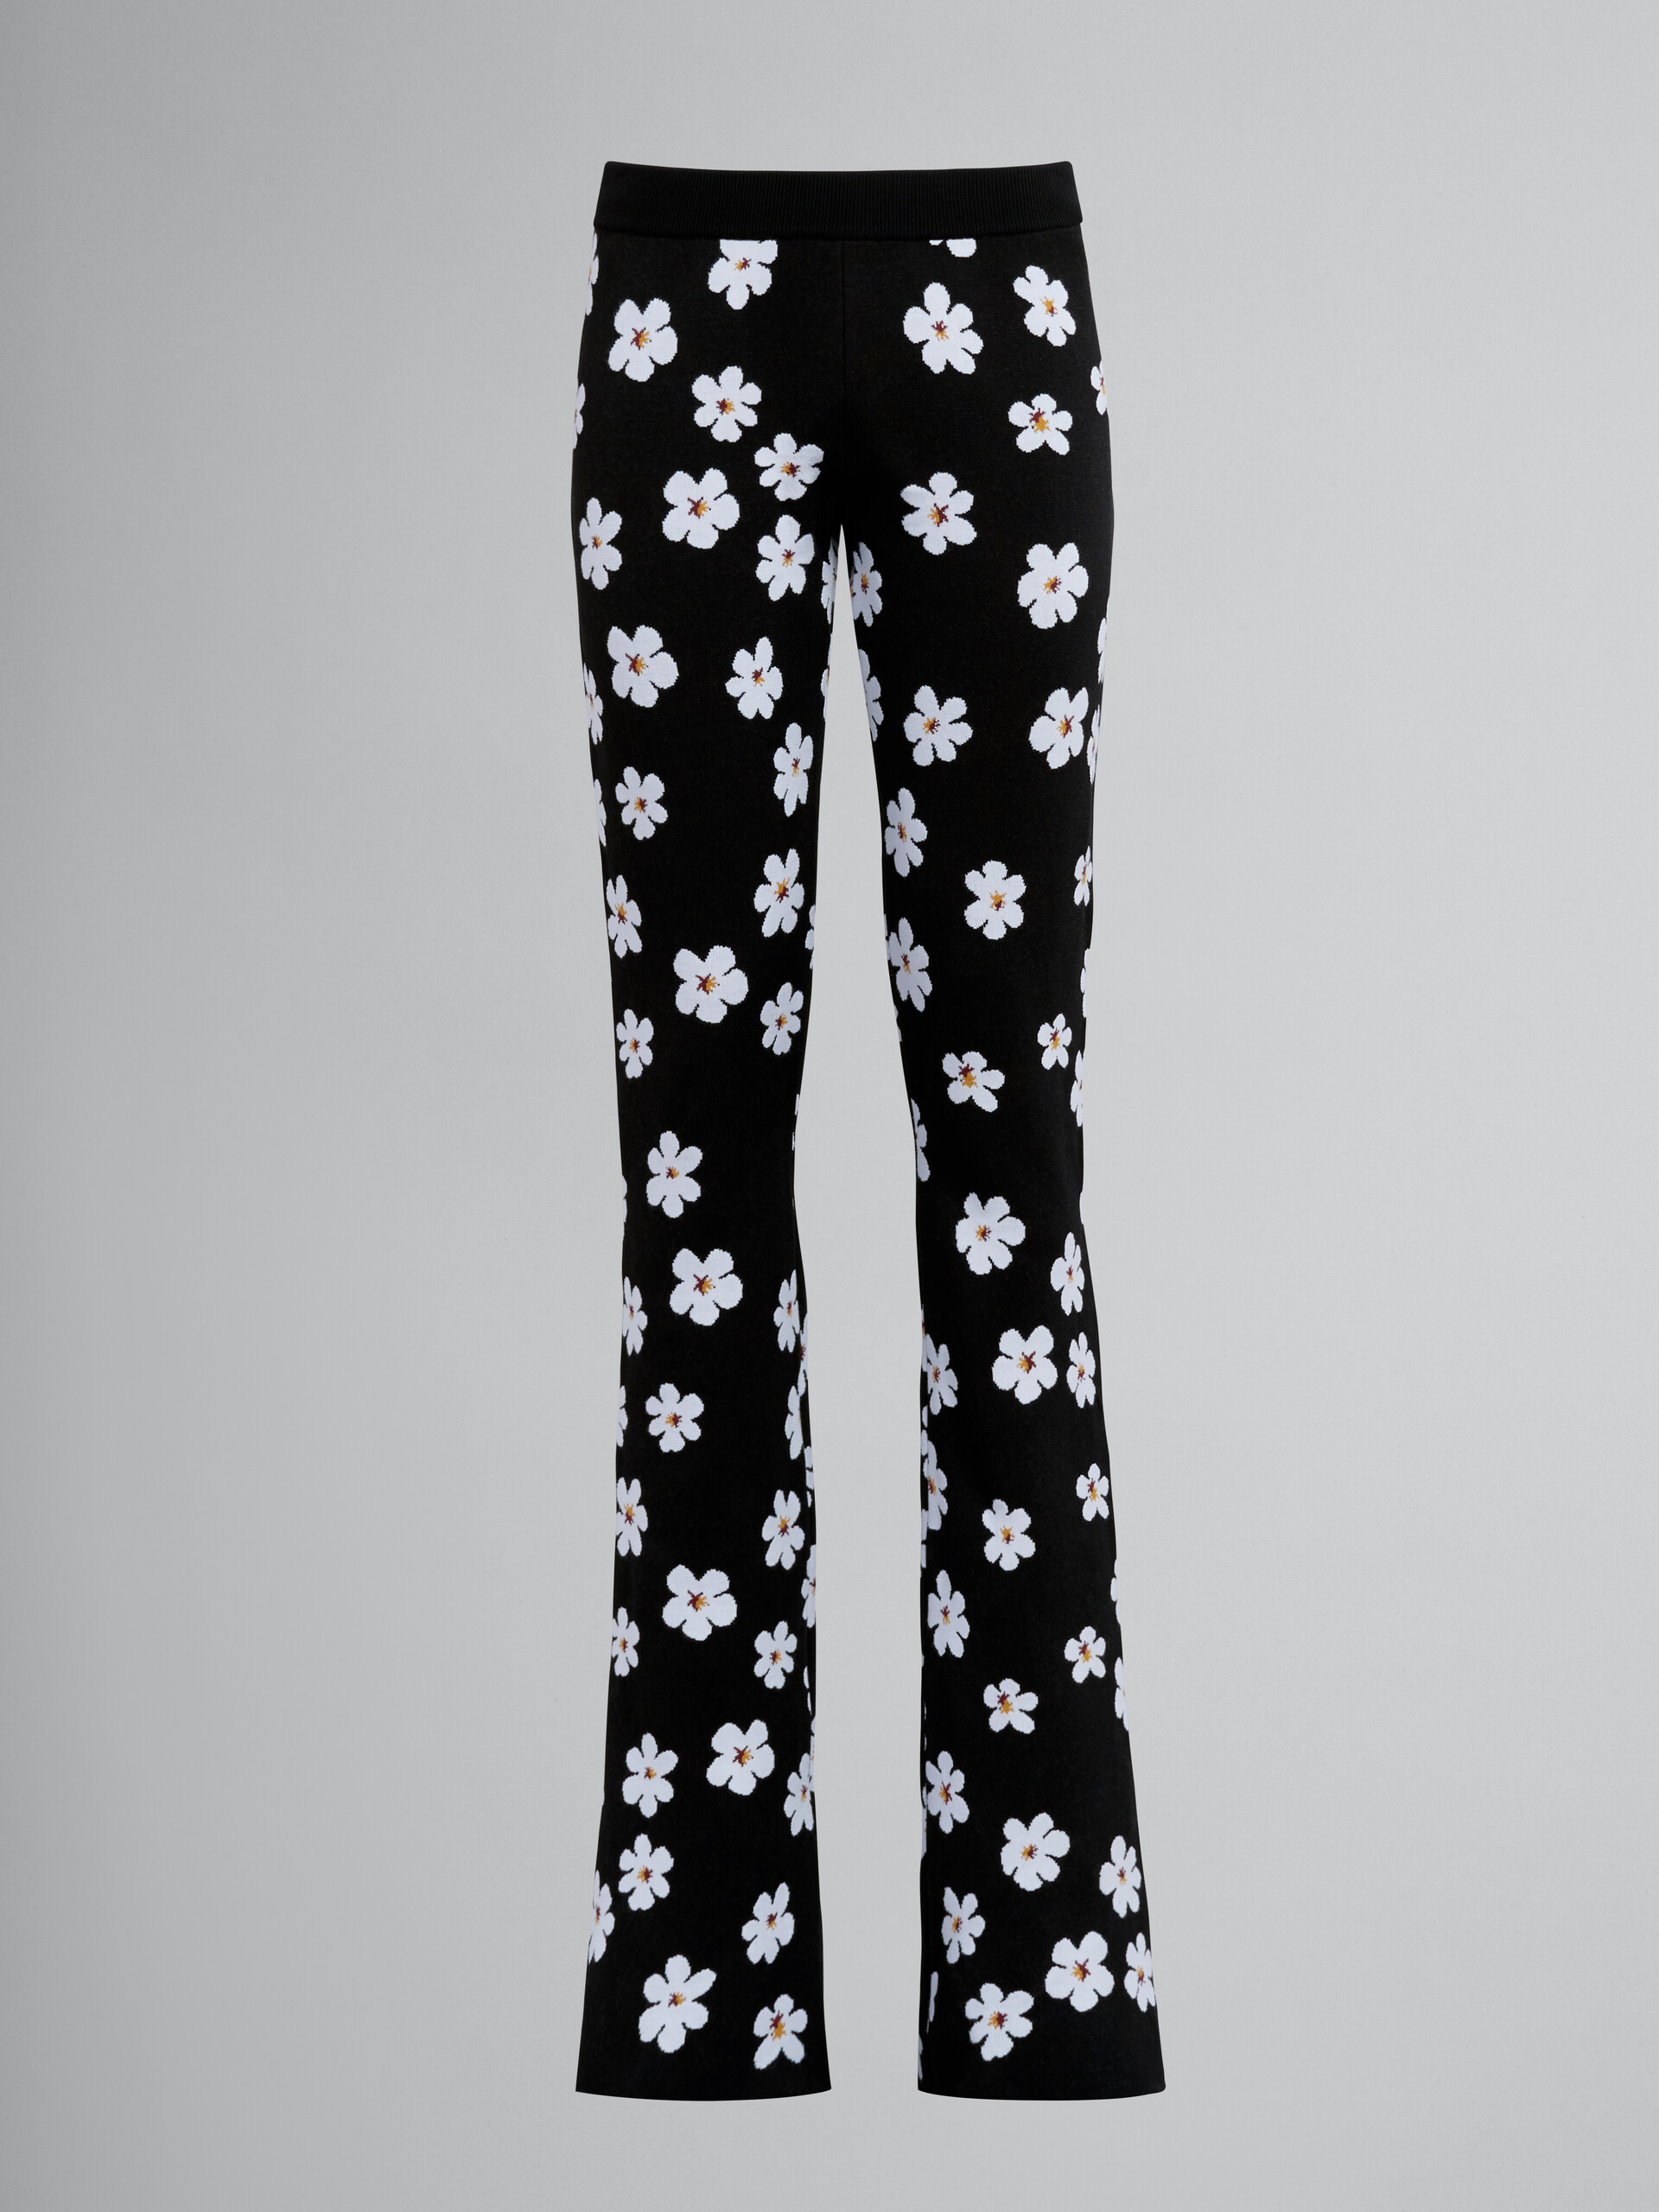 Daisy jacquard pants - Pants - Image 1